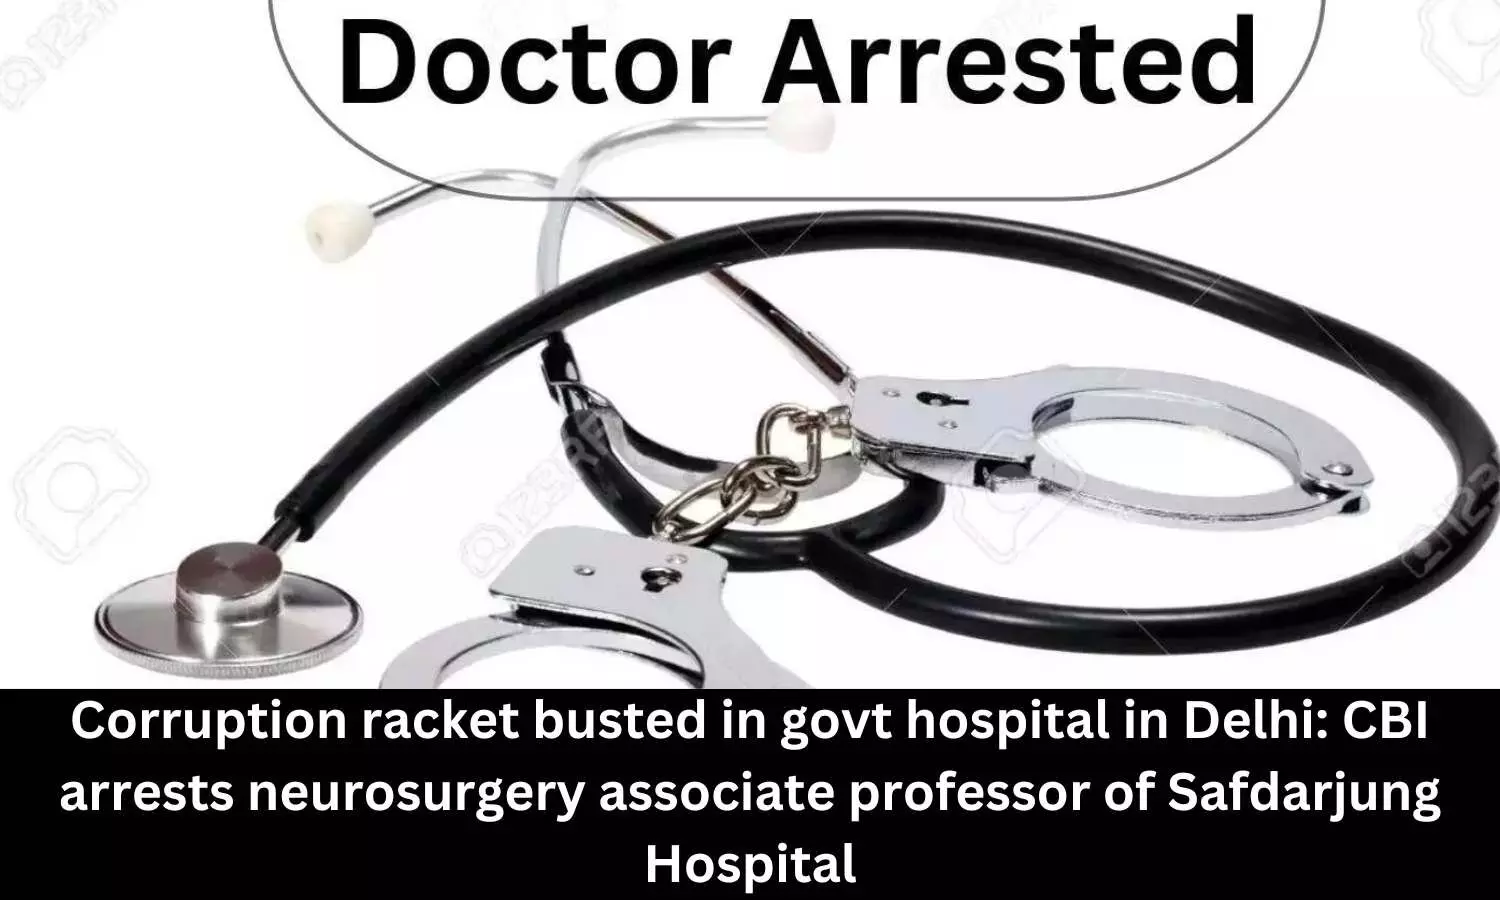 Neurosurgery Associate Professor of Safdarjung Hospital arrested by CBI for illegal activities